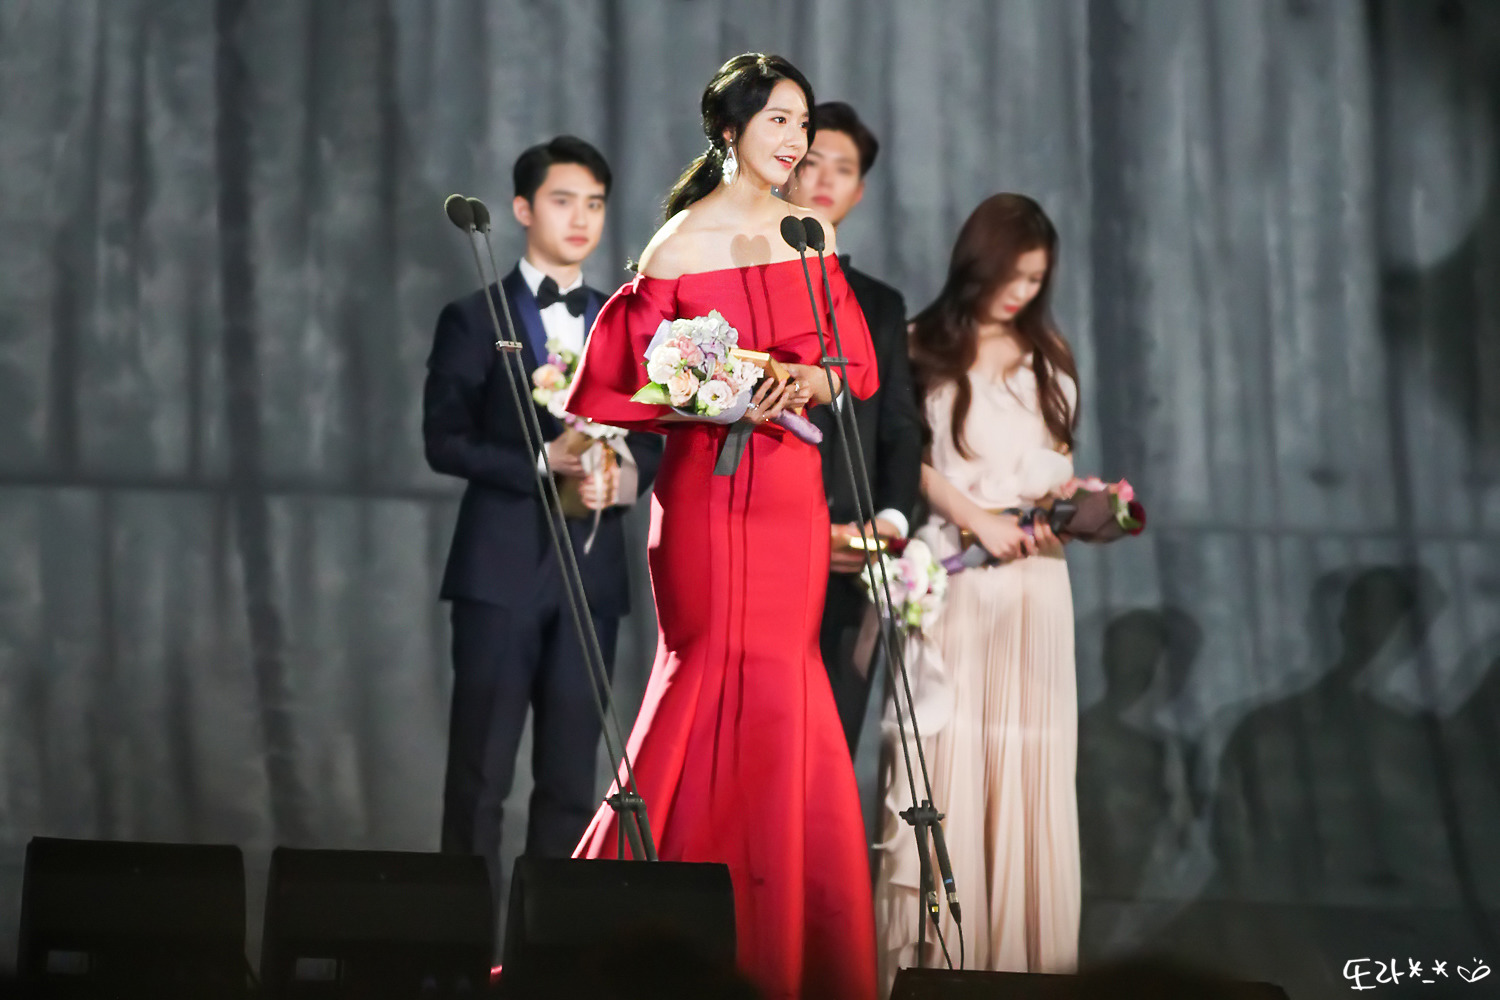 [PIC][03-05-2017]YoonA tham dự "53rd Baeksang Arts Awards" vào chiều nay + Giành "Most Popular Actress or Star Century Popularity Award (in Film)" - Page 2 250DAB35590C665219F33E